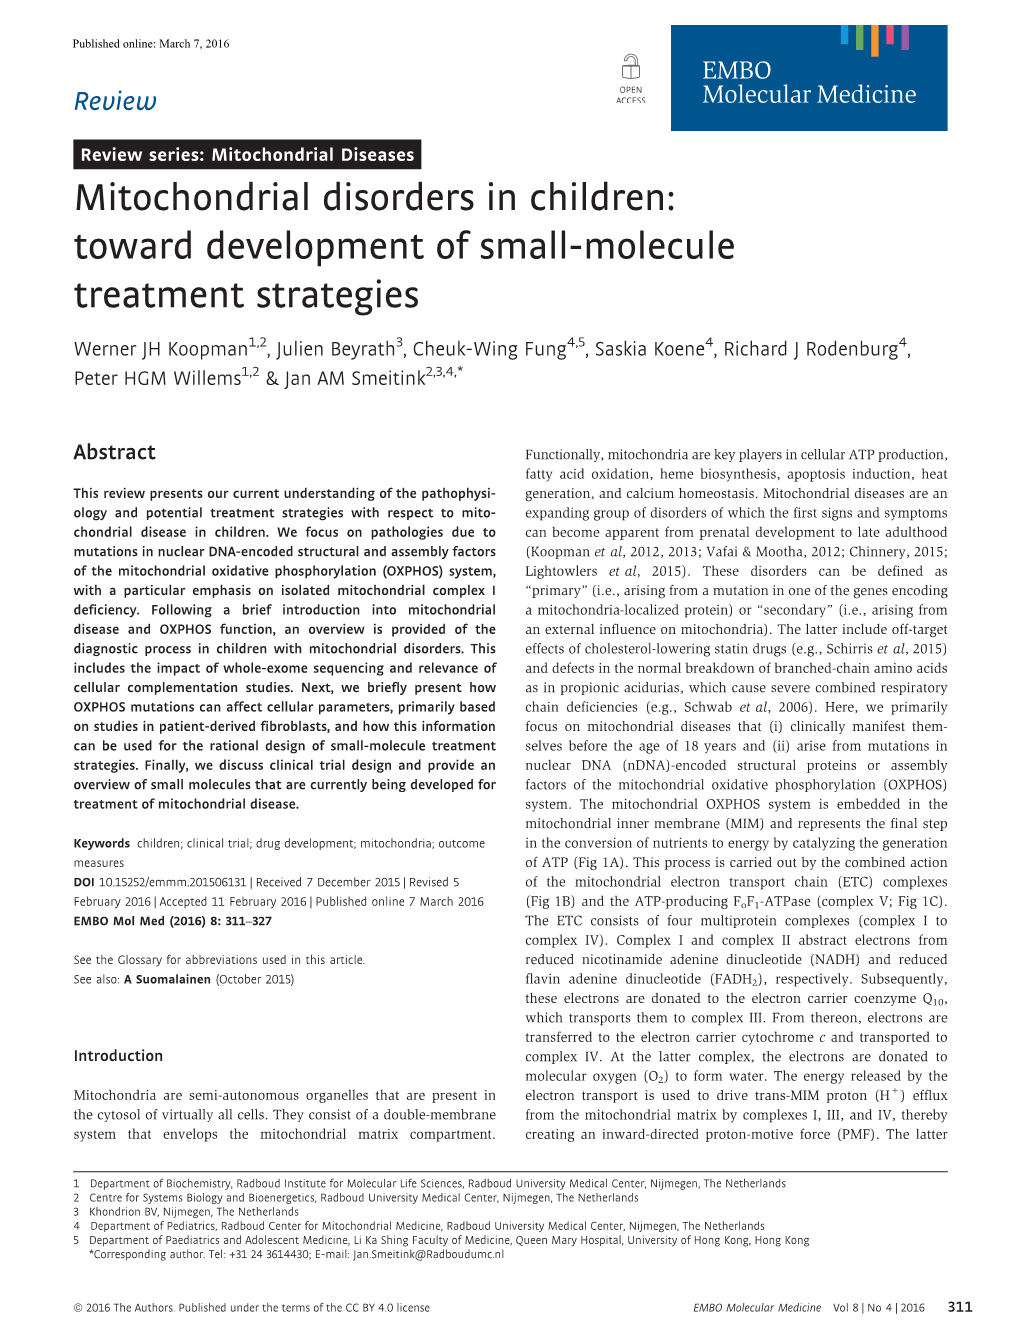 Mitochondrial Disorders in Children: Toward Development of Small-Molecule Treatment Strategies